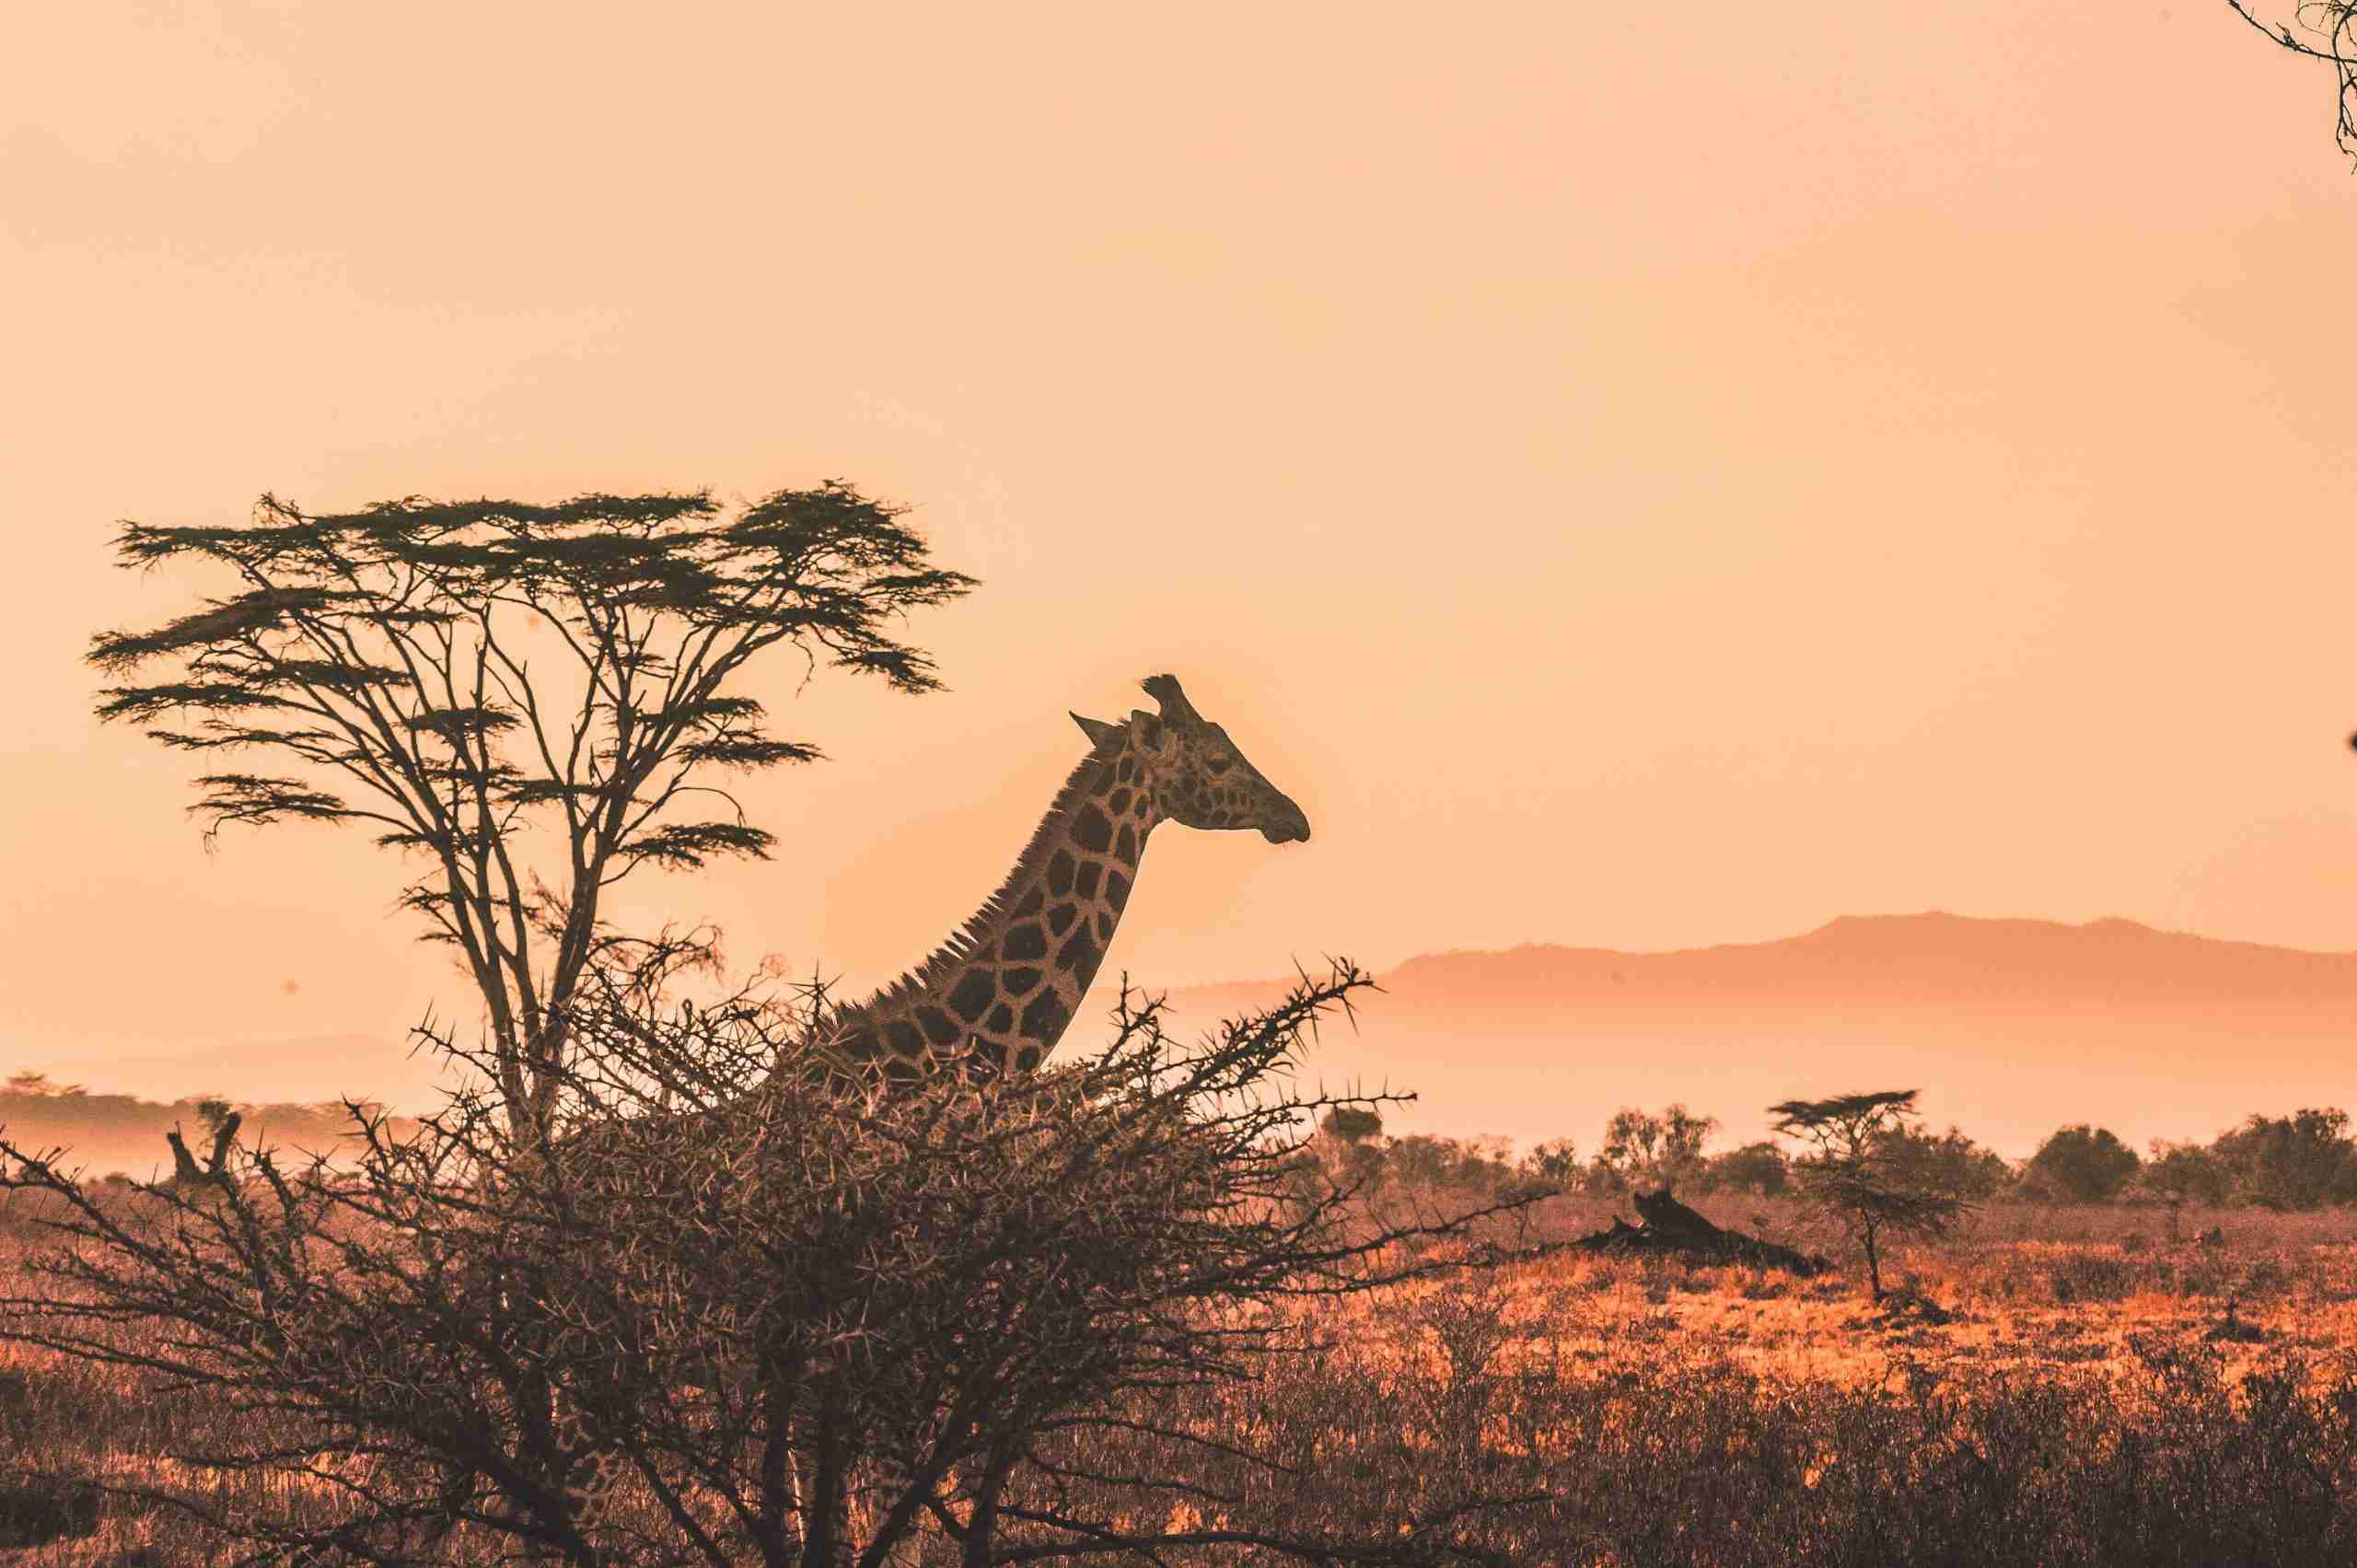 Remarkable Shot of Giraffe Looming in Mist